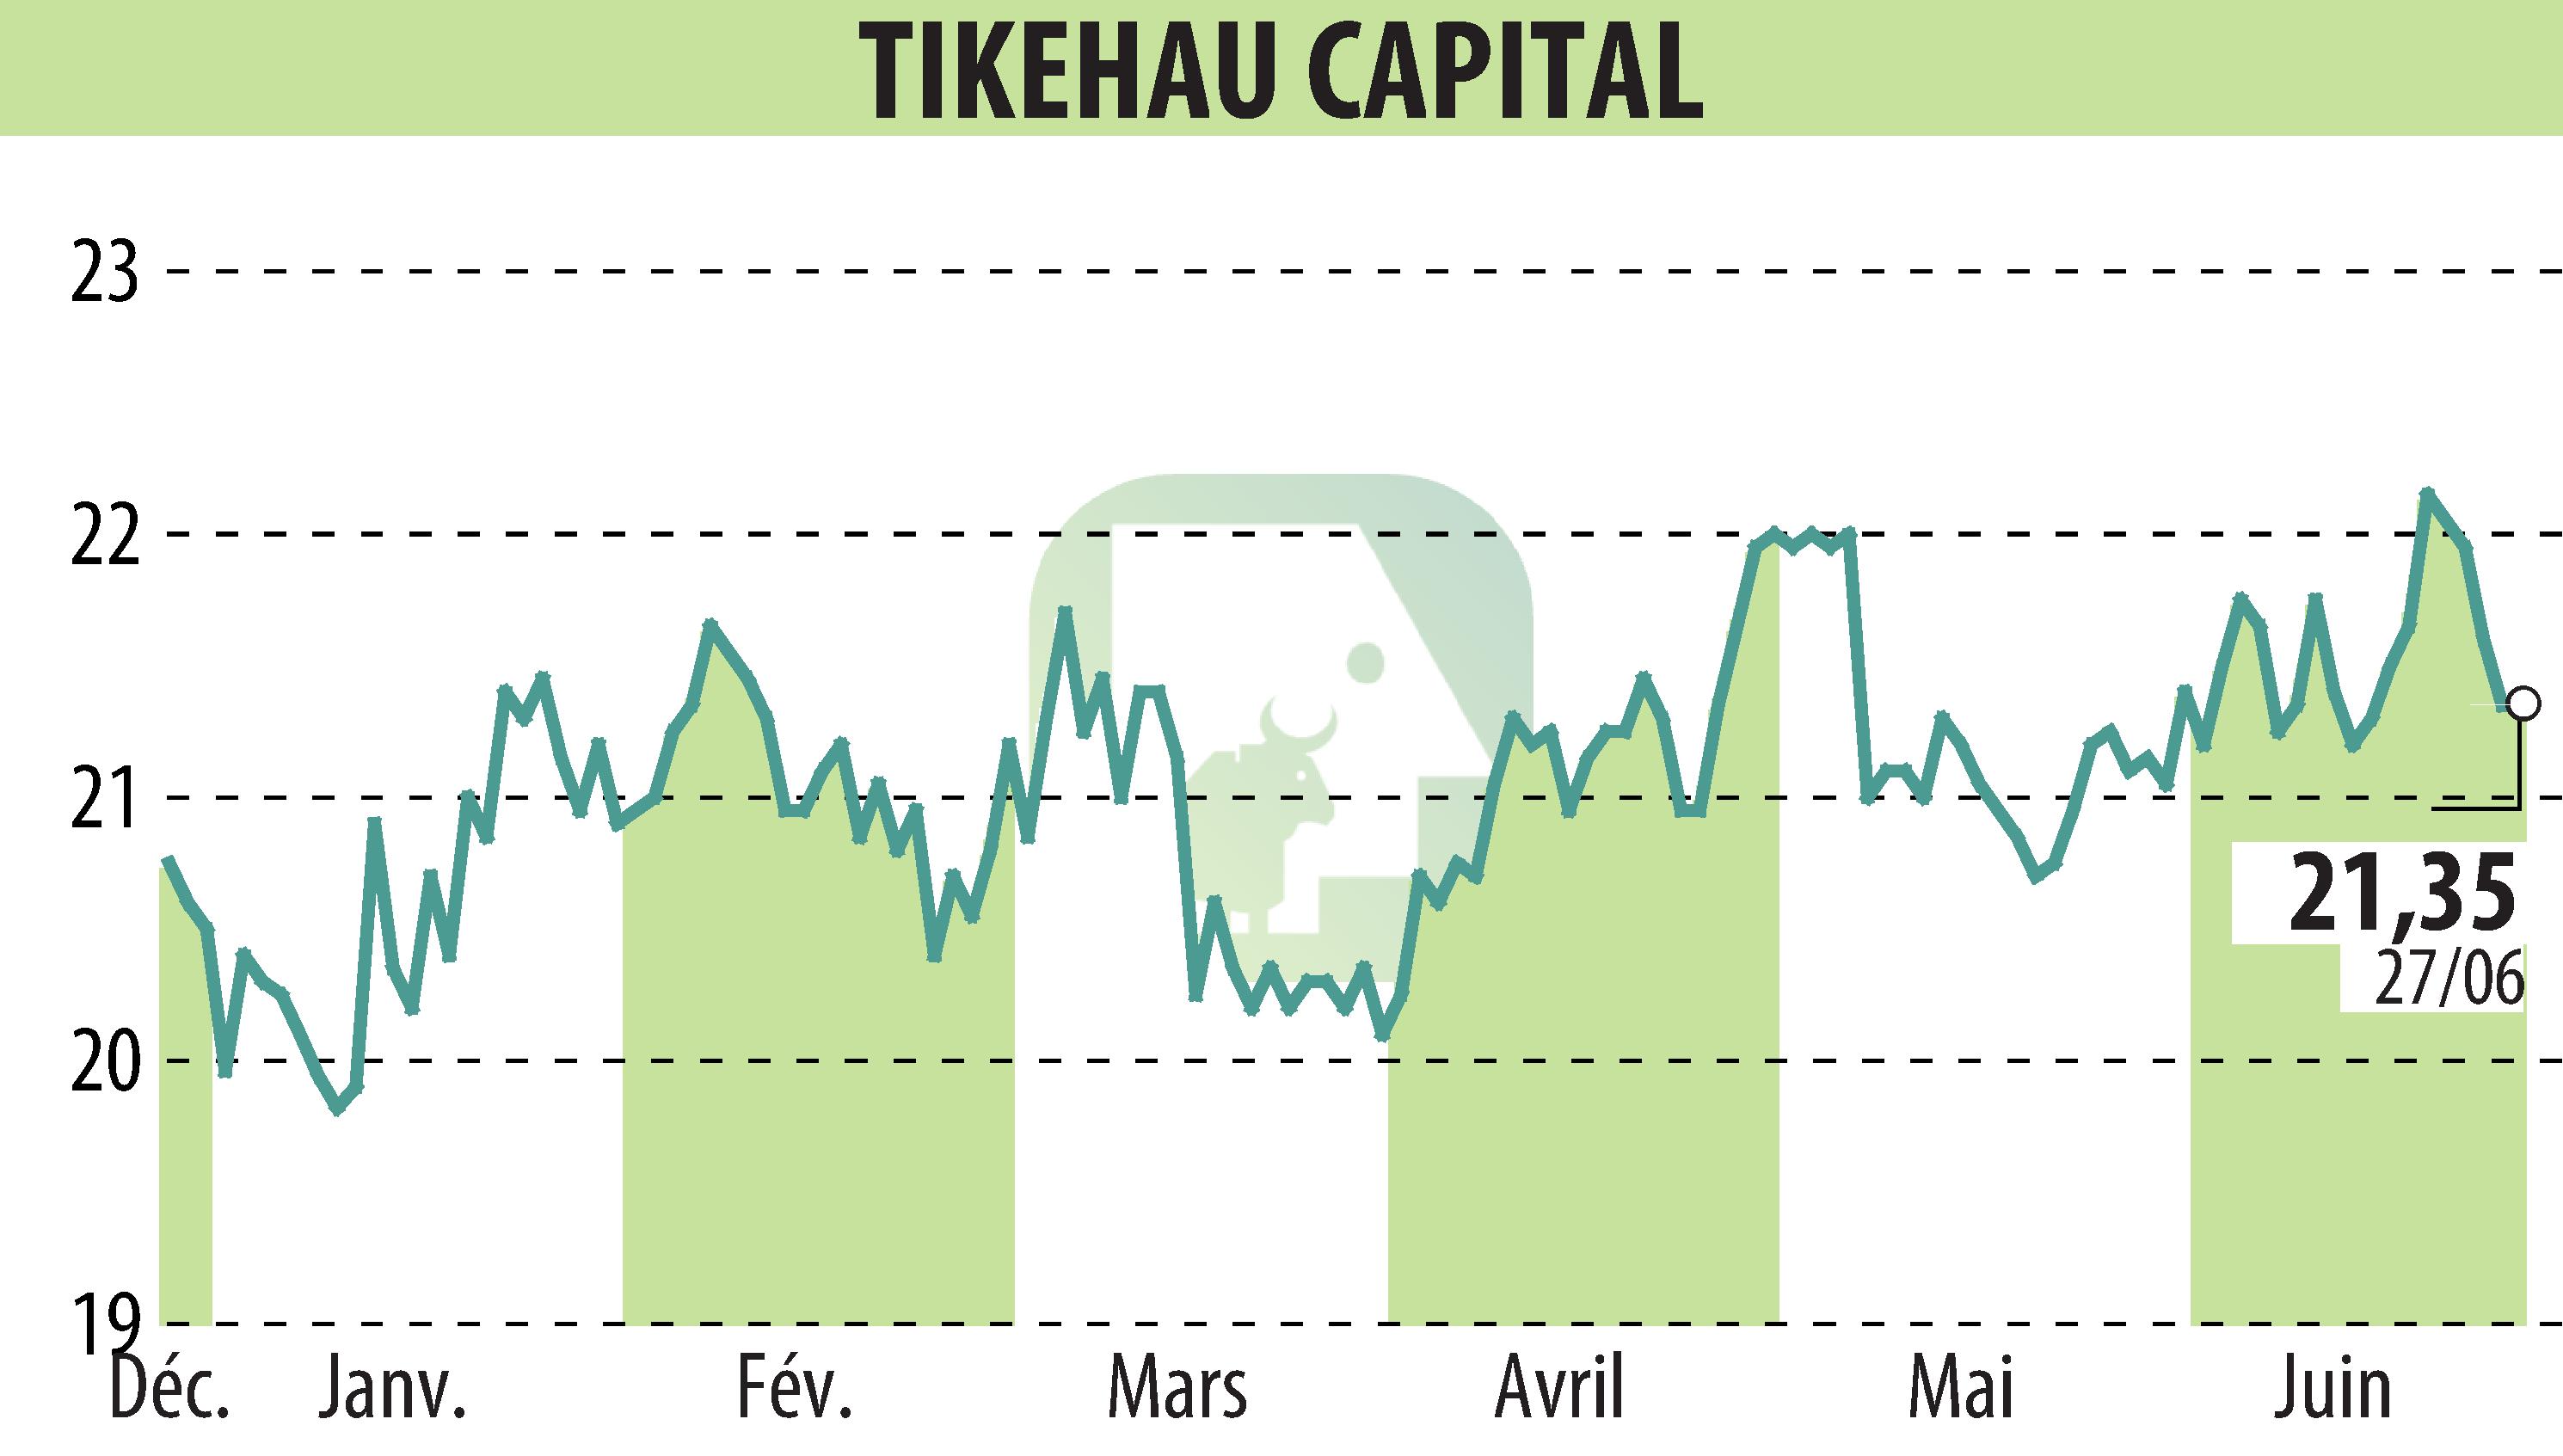 Stock price chart of TIKEHAU CAPITAL (EPA:TKO) showing fluctuations.